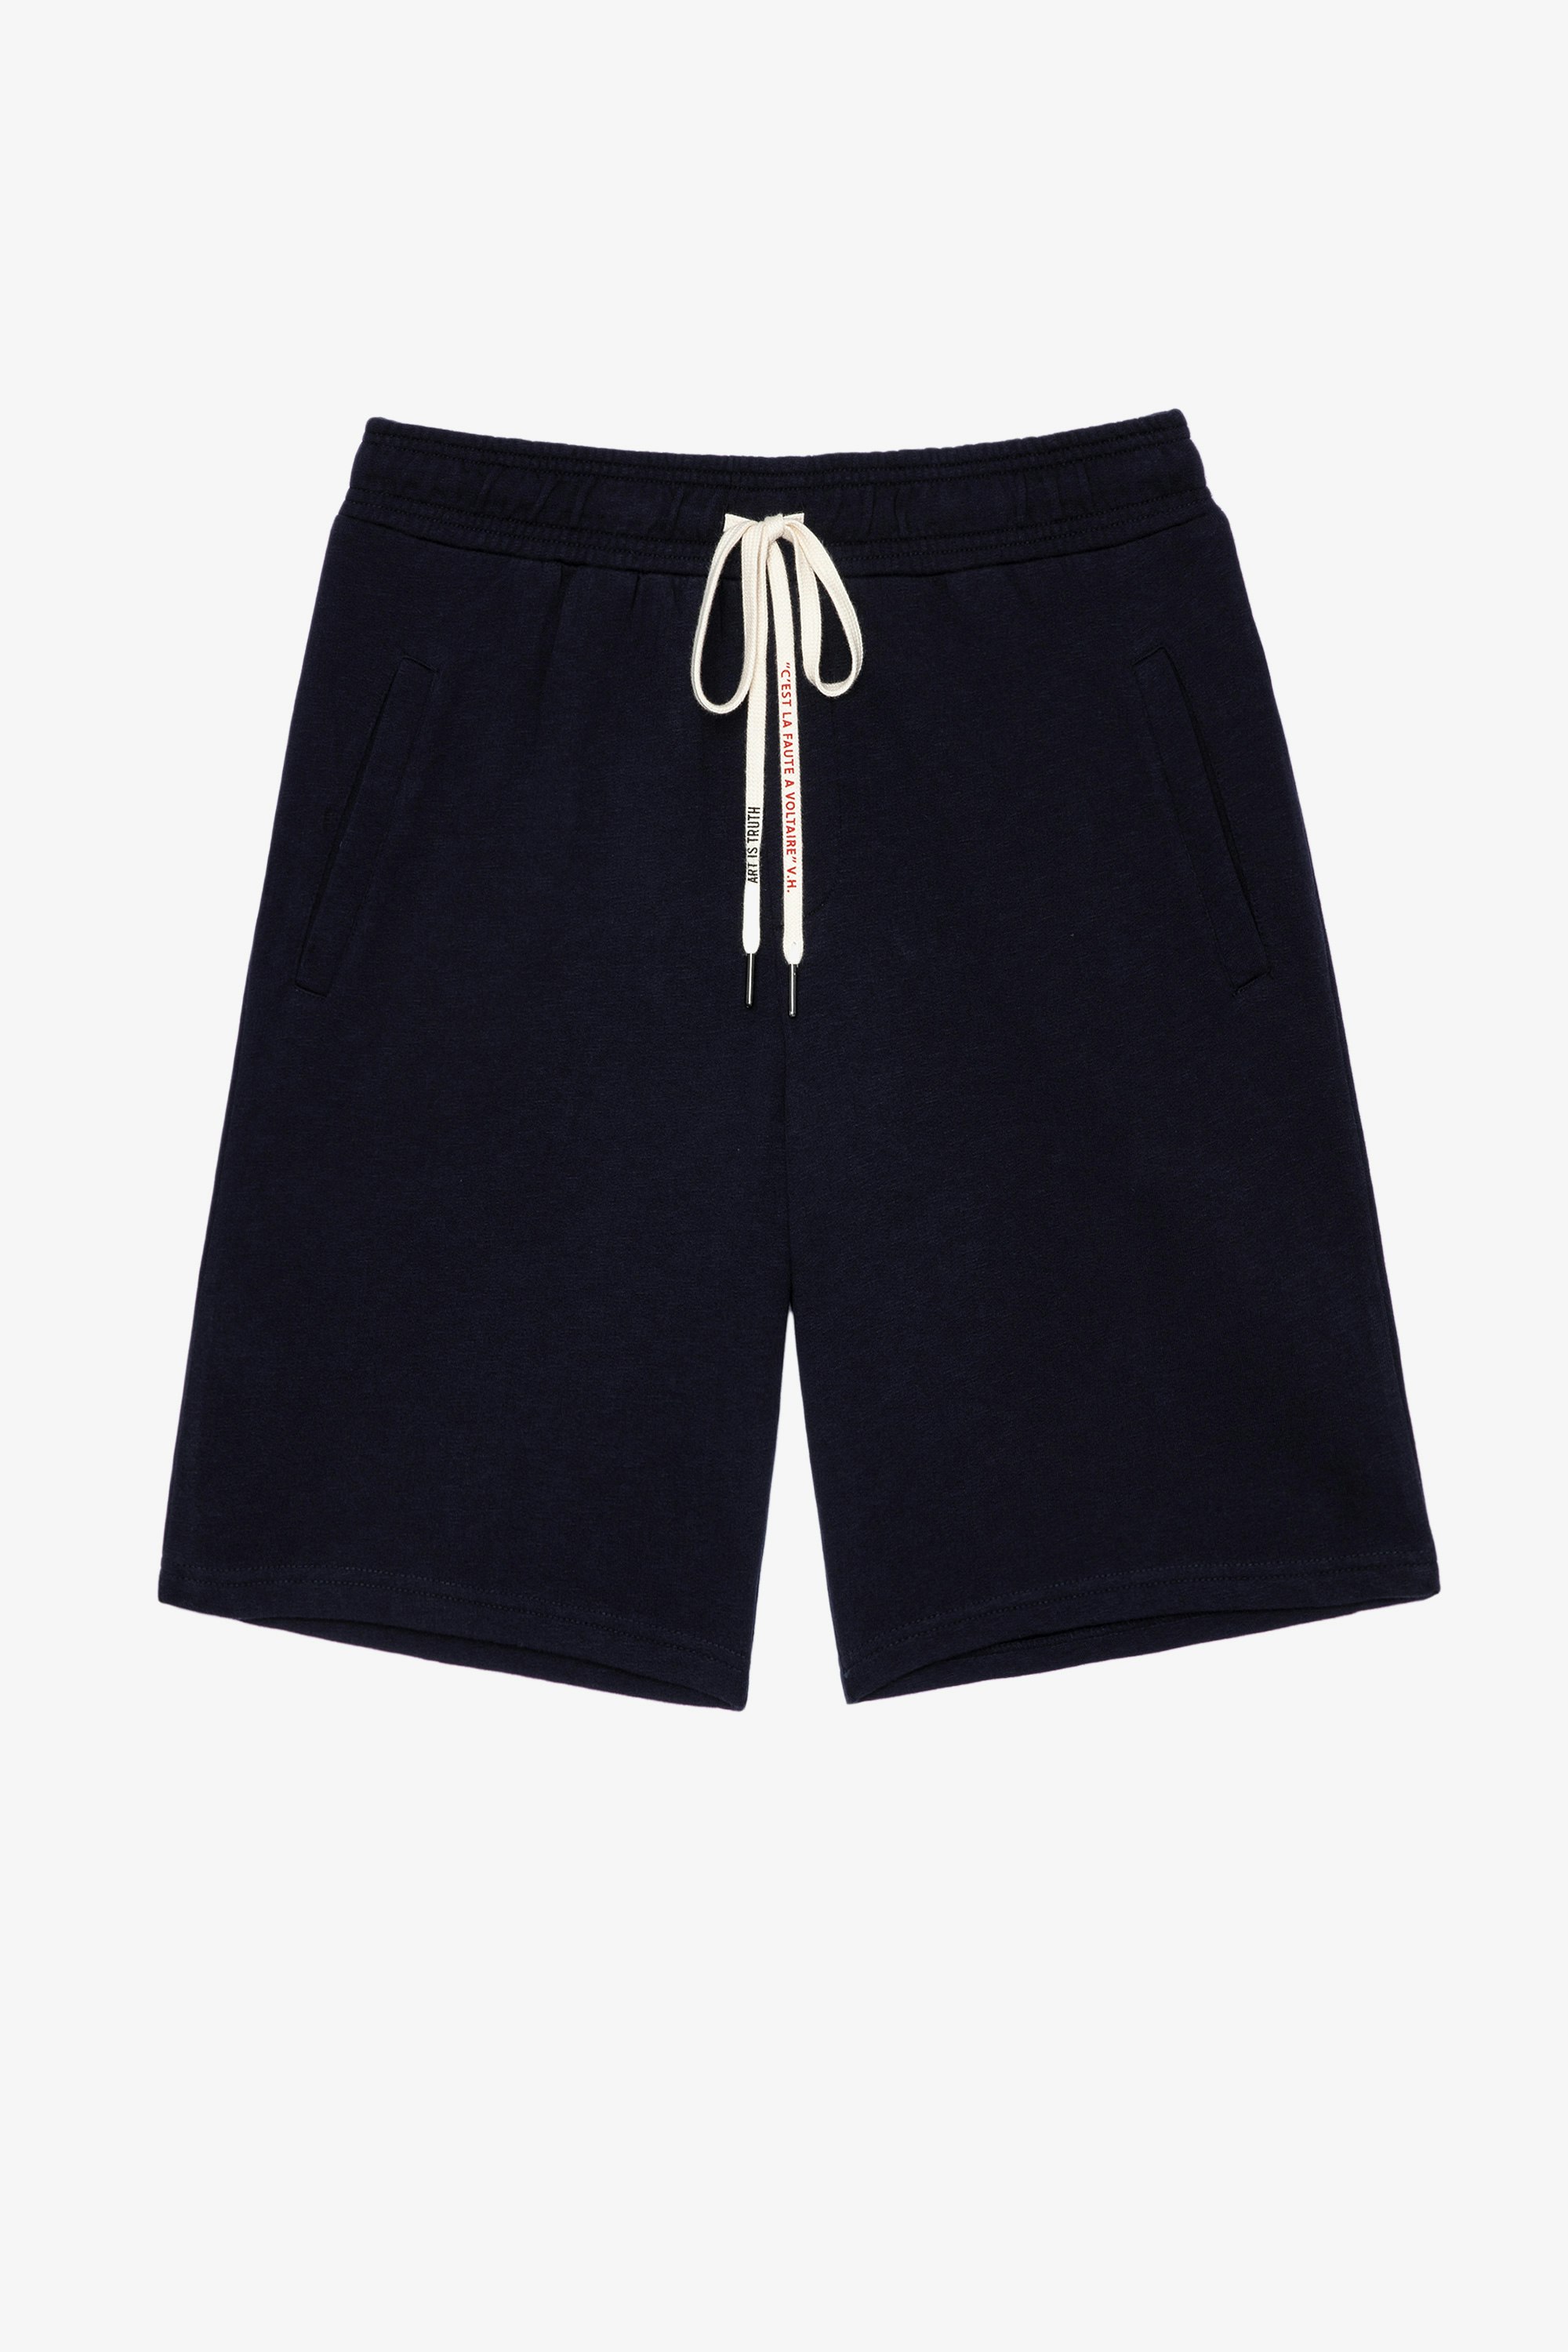 Party Shorts Men's navy blue cotton shorts